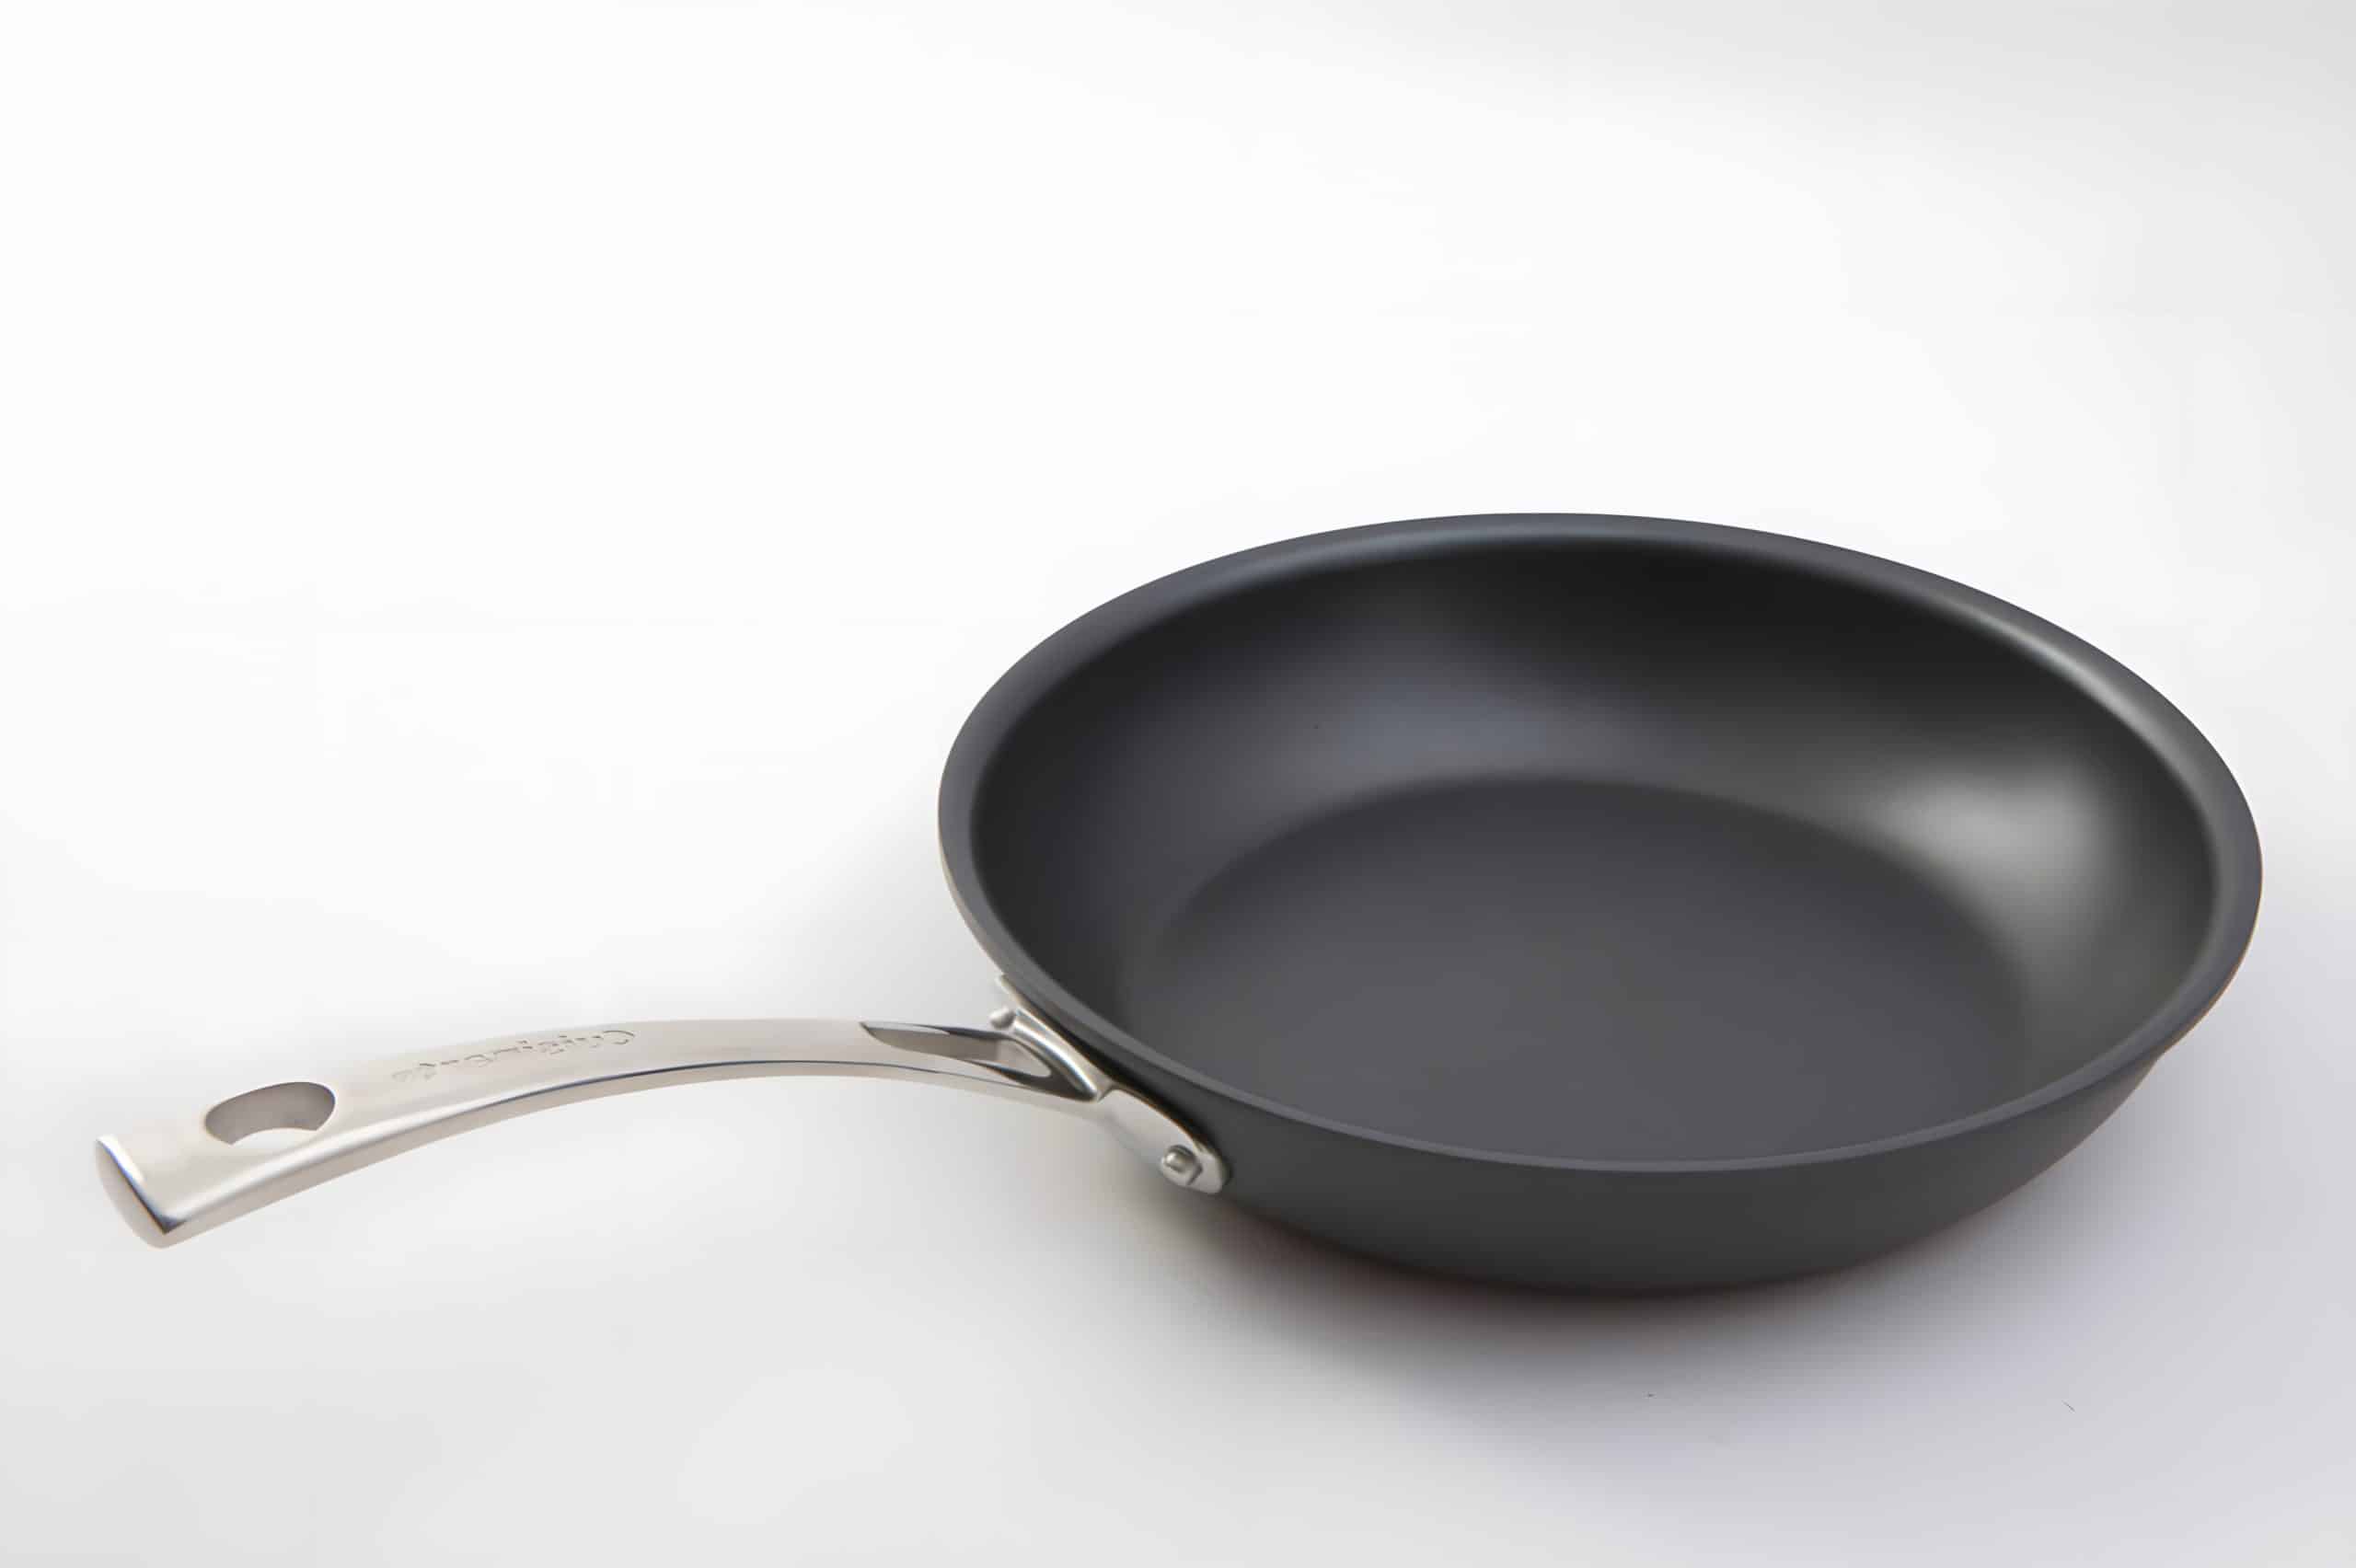 Cuisinart Non-Stick Pots and Pans Features